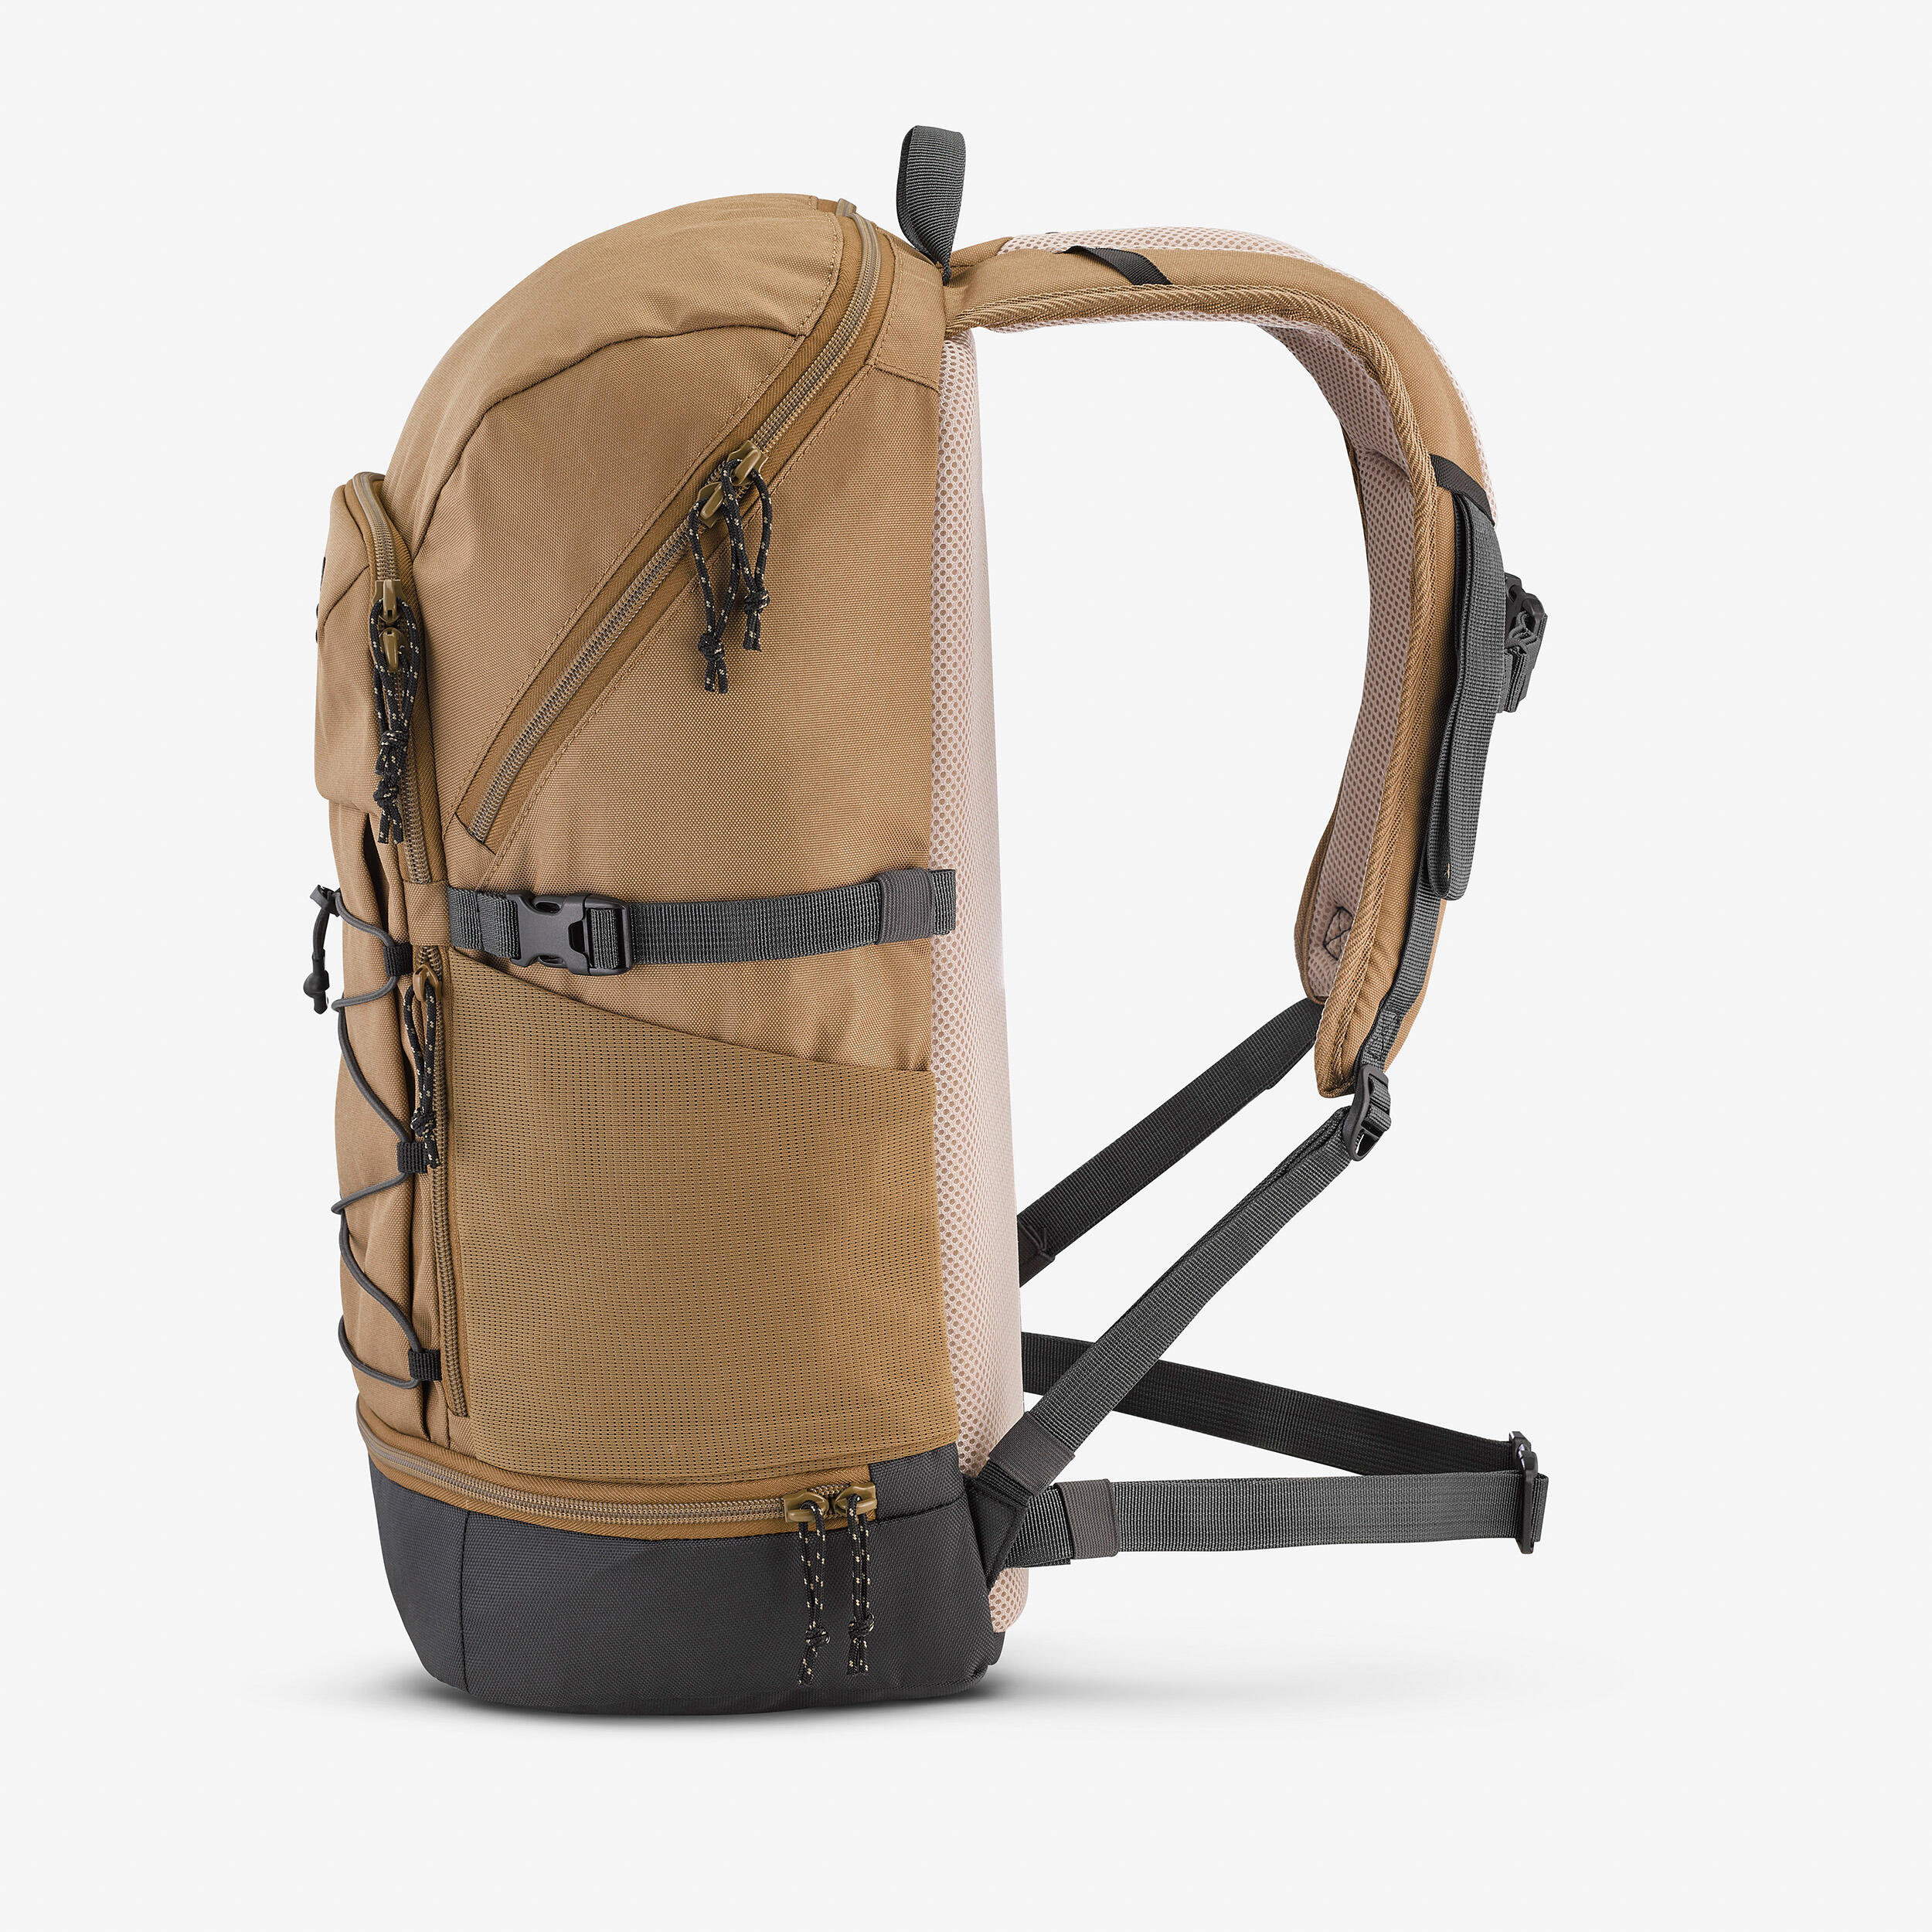 Hiking backpack 30L - NH Arpenaz 500 15/15